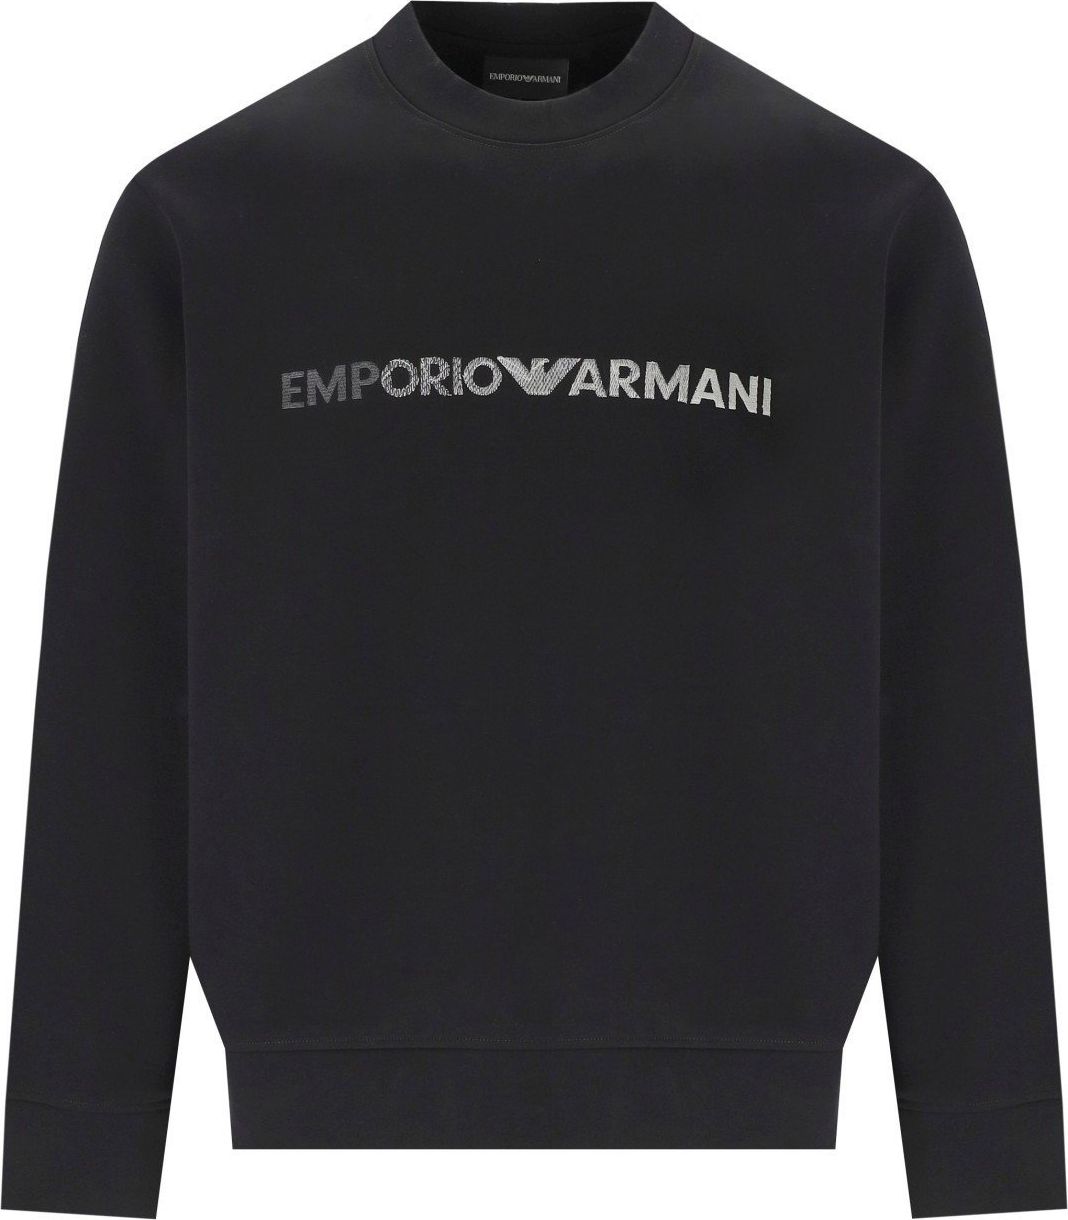 Emporio Armani Drawing Black Sweatshirt Black Zwart